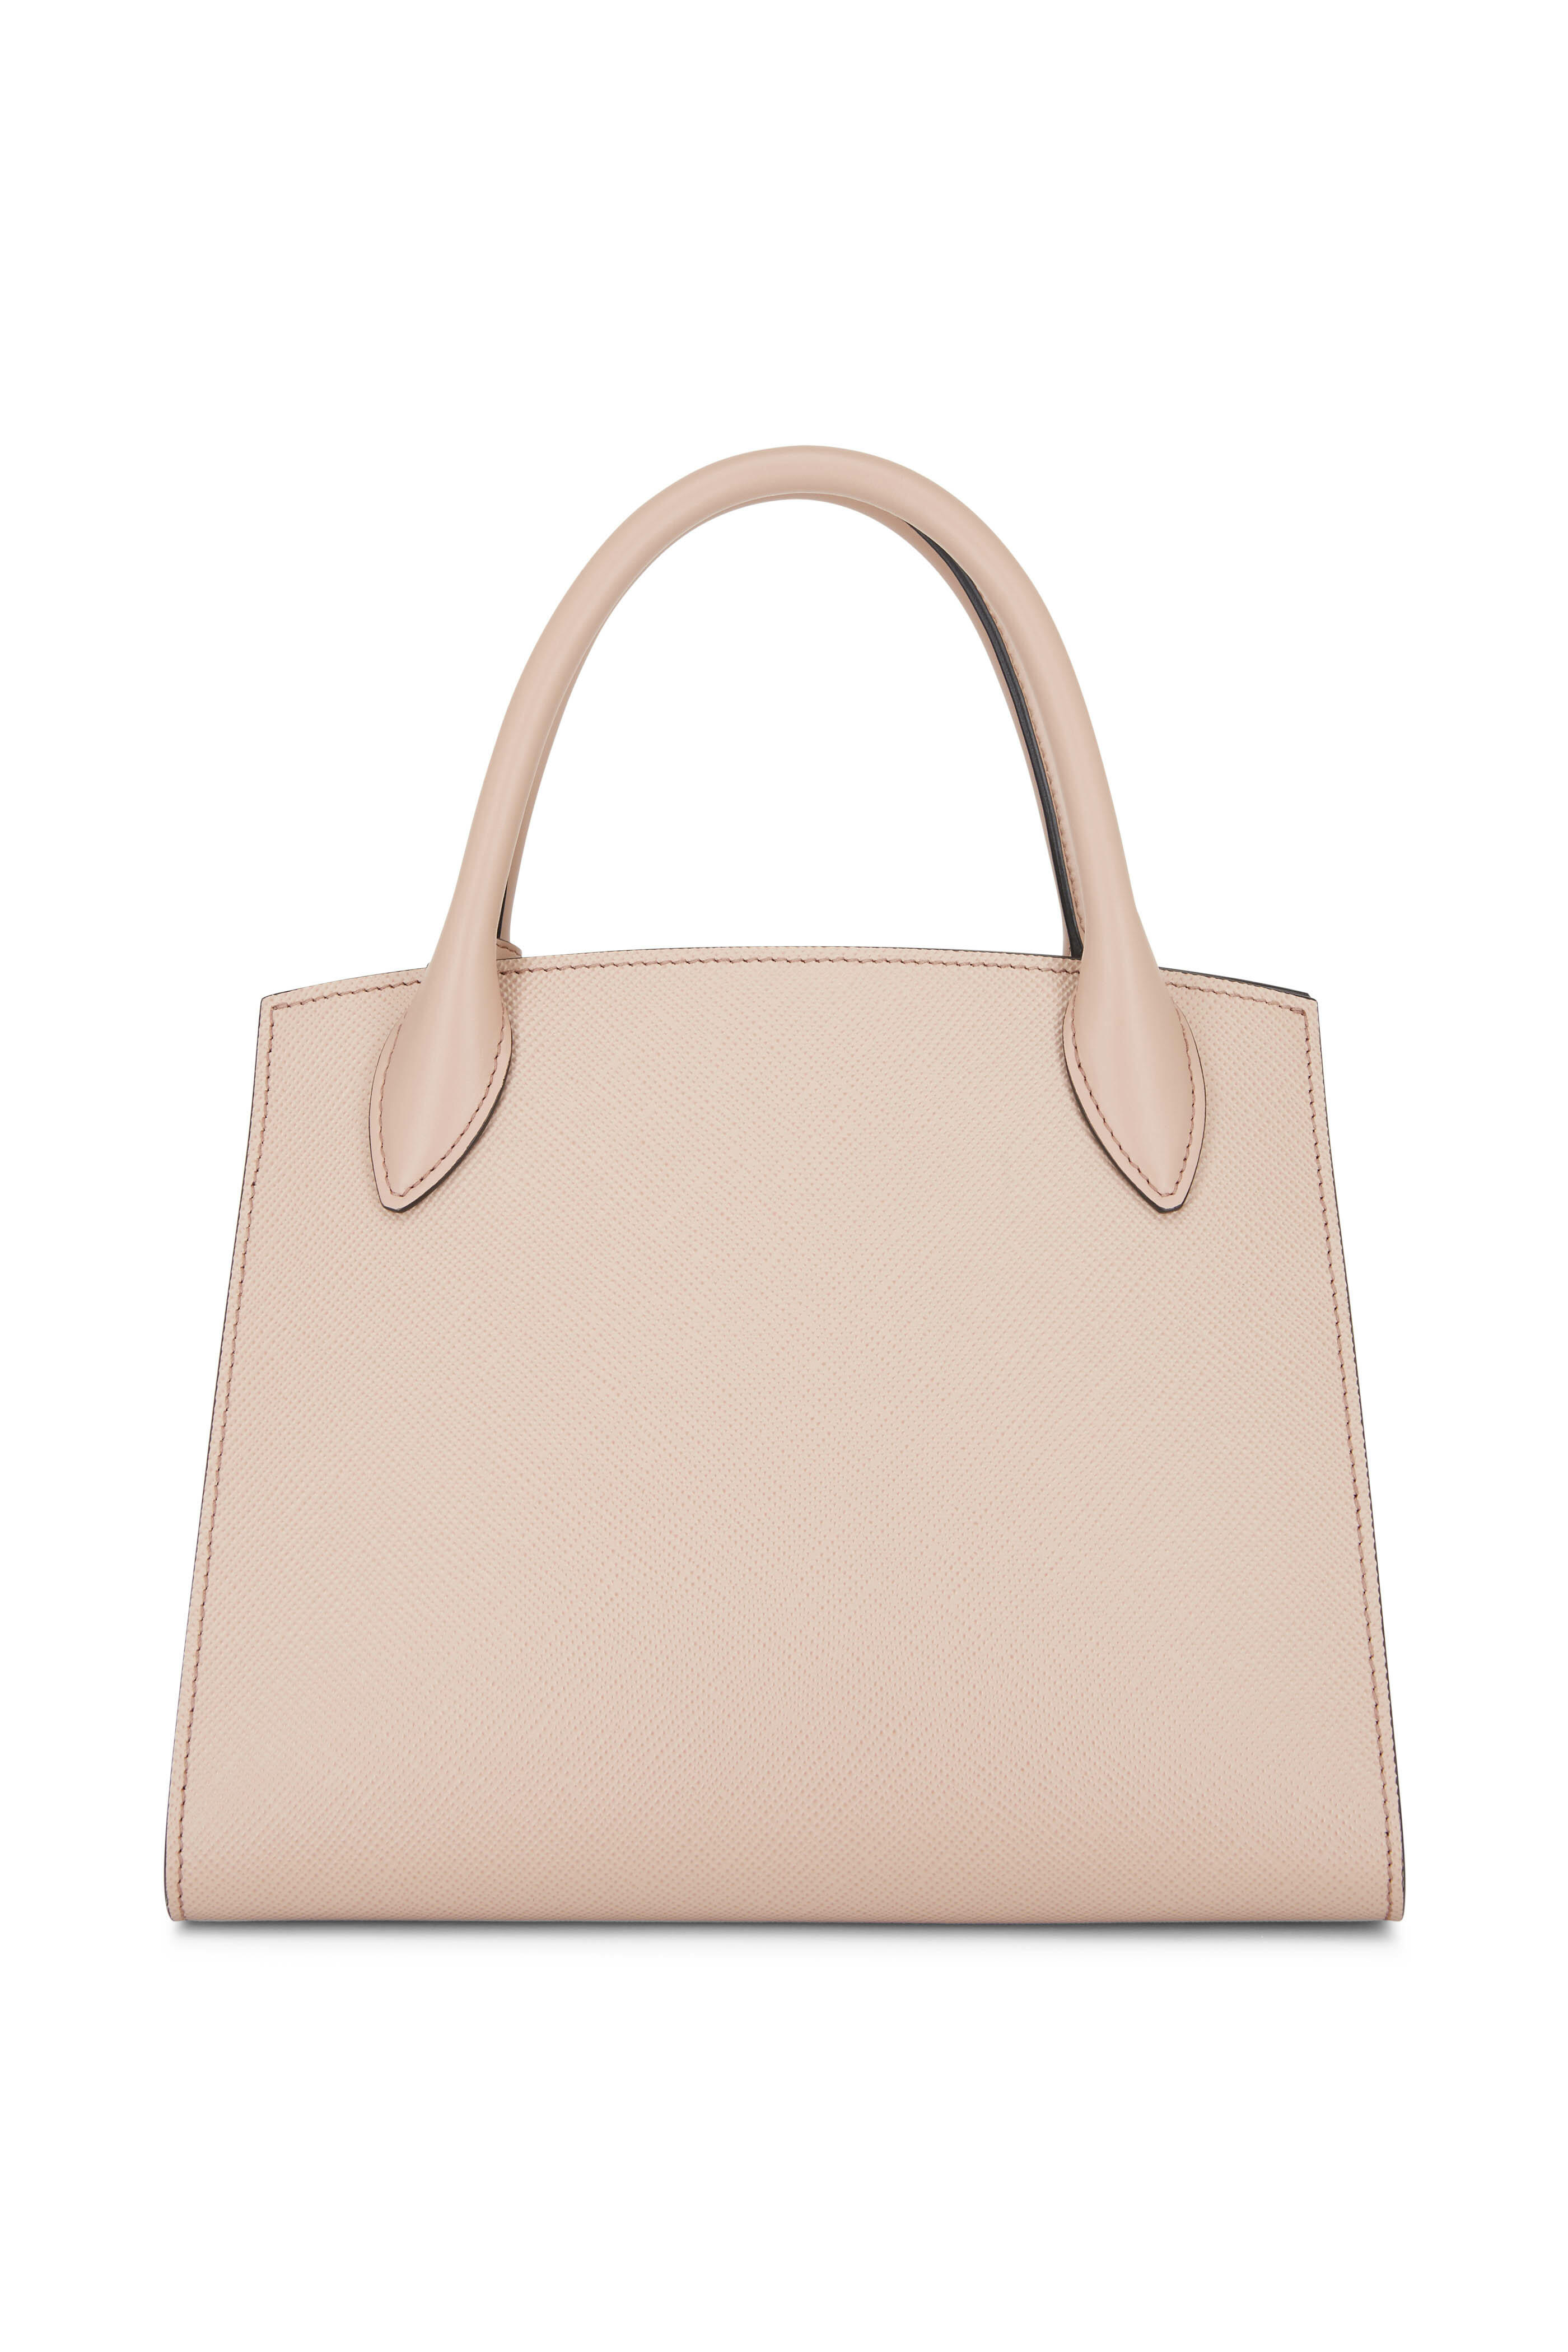 Prada Women's Mini Saffiano Leather Shoulder Bag